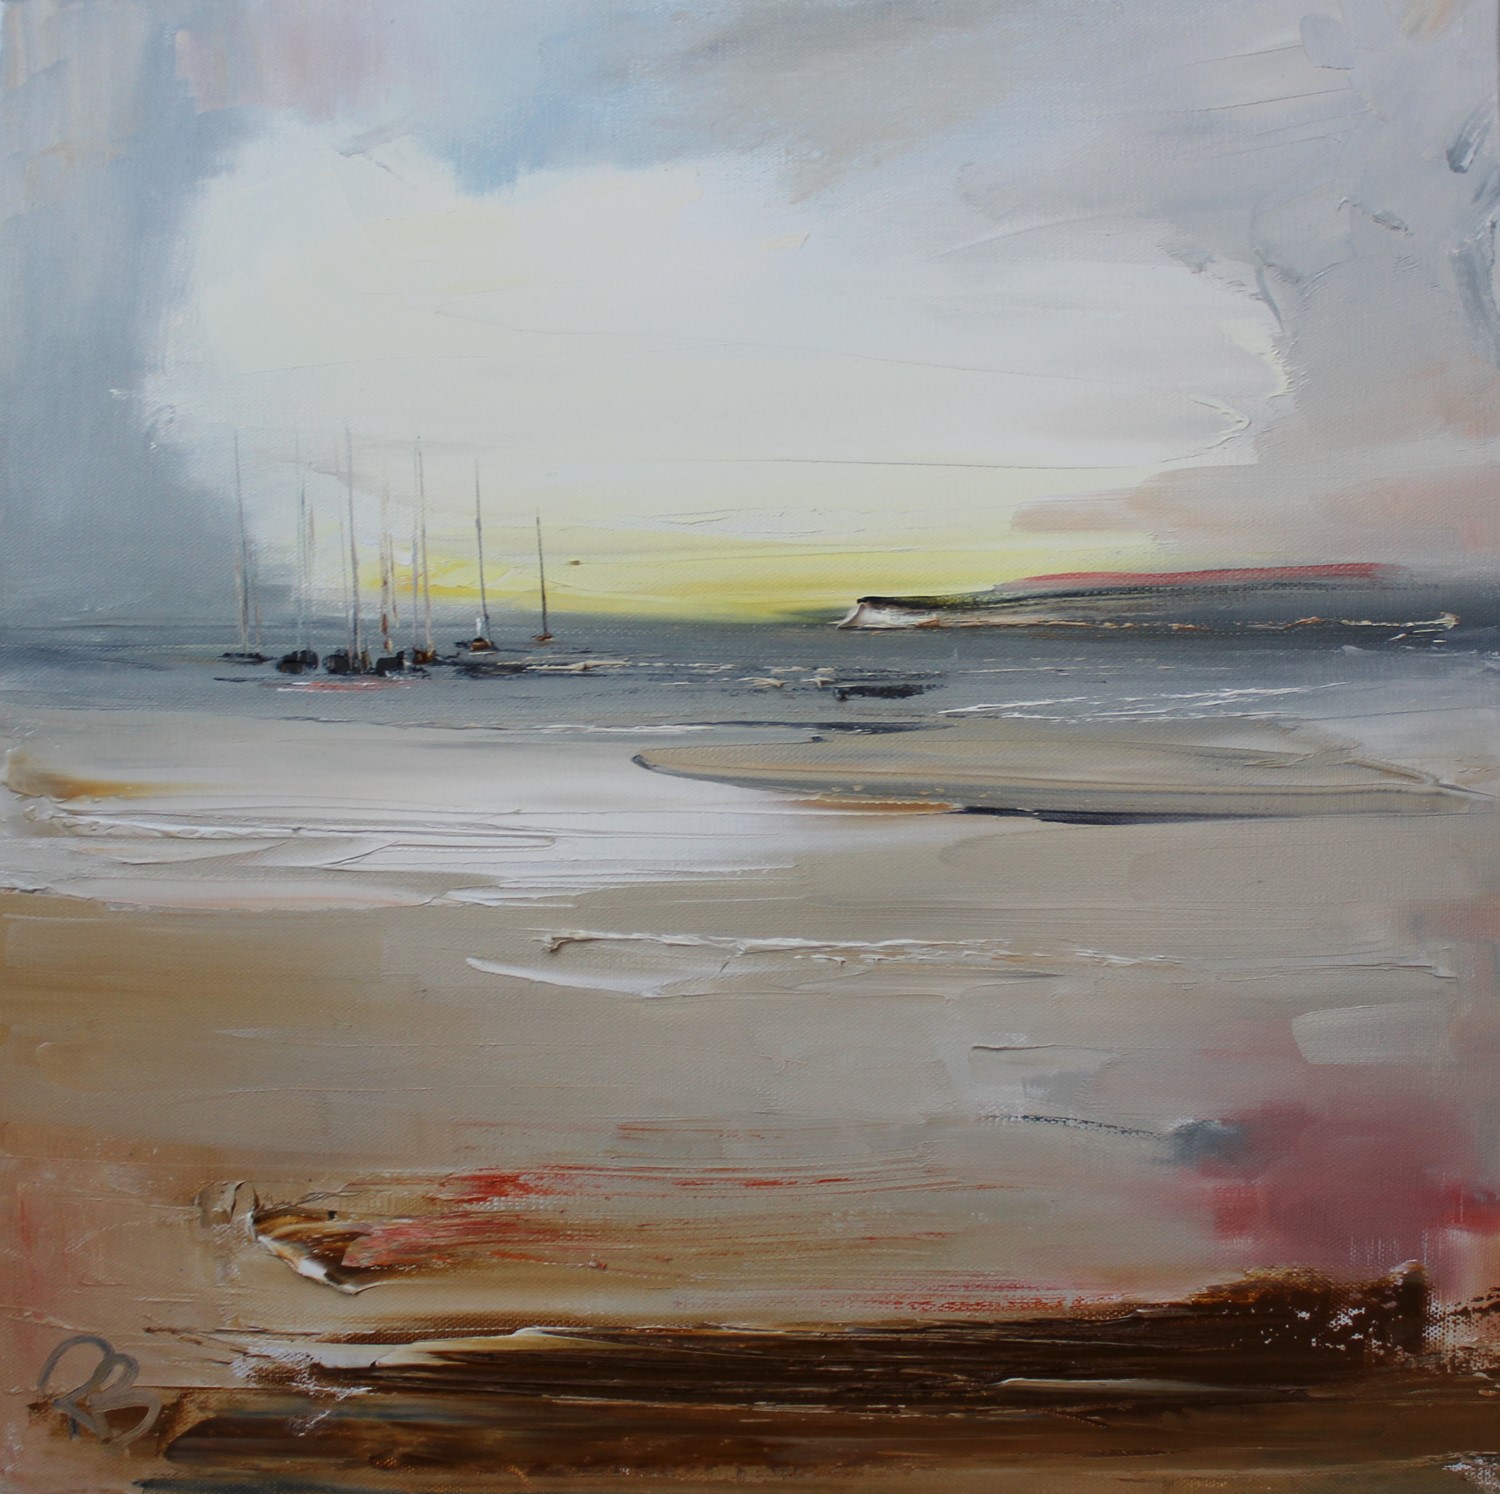 'On East Coast Sands' by artist Rosanne Barr